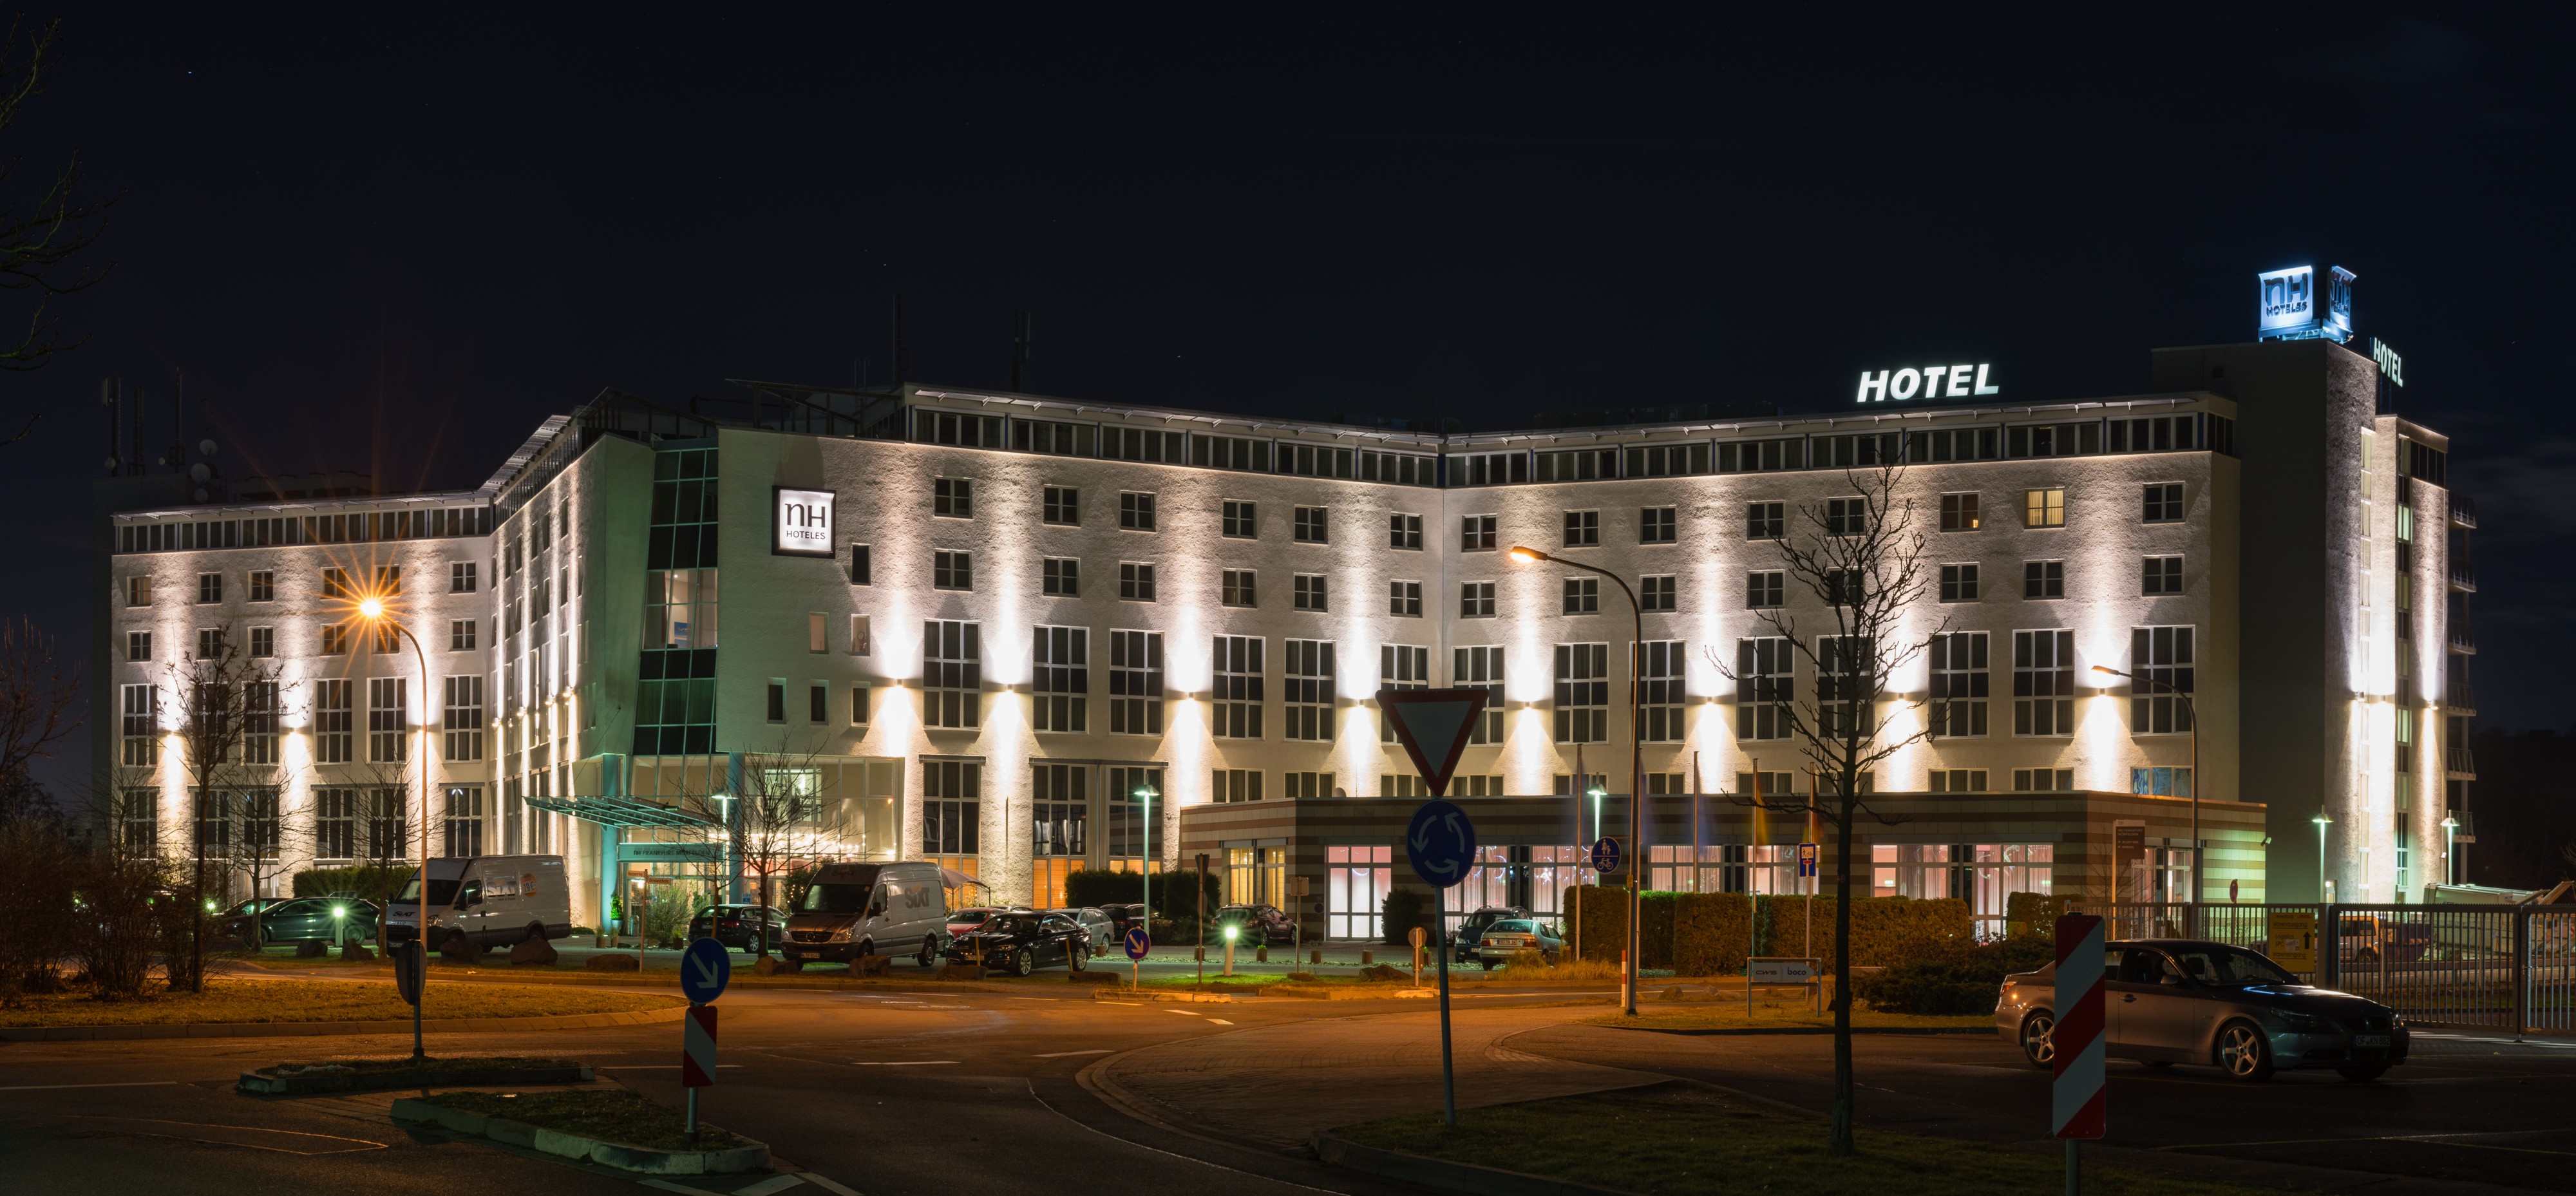 Nh hotel - Mörfelden-Walldor - Hesse - Germany - 01